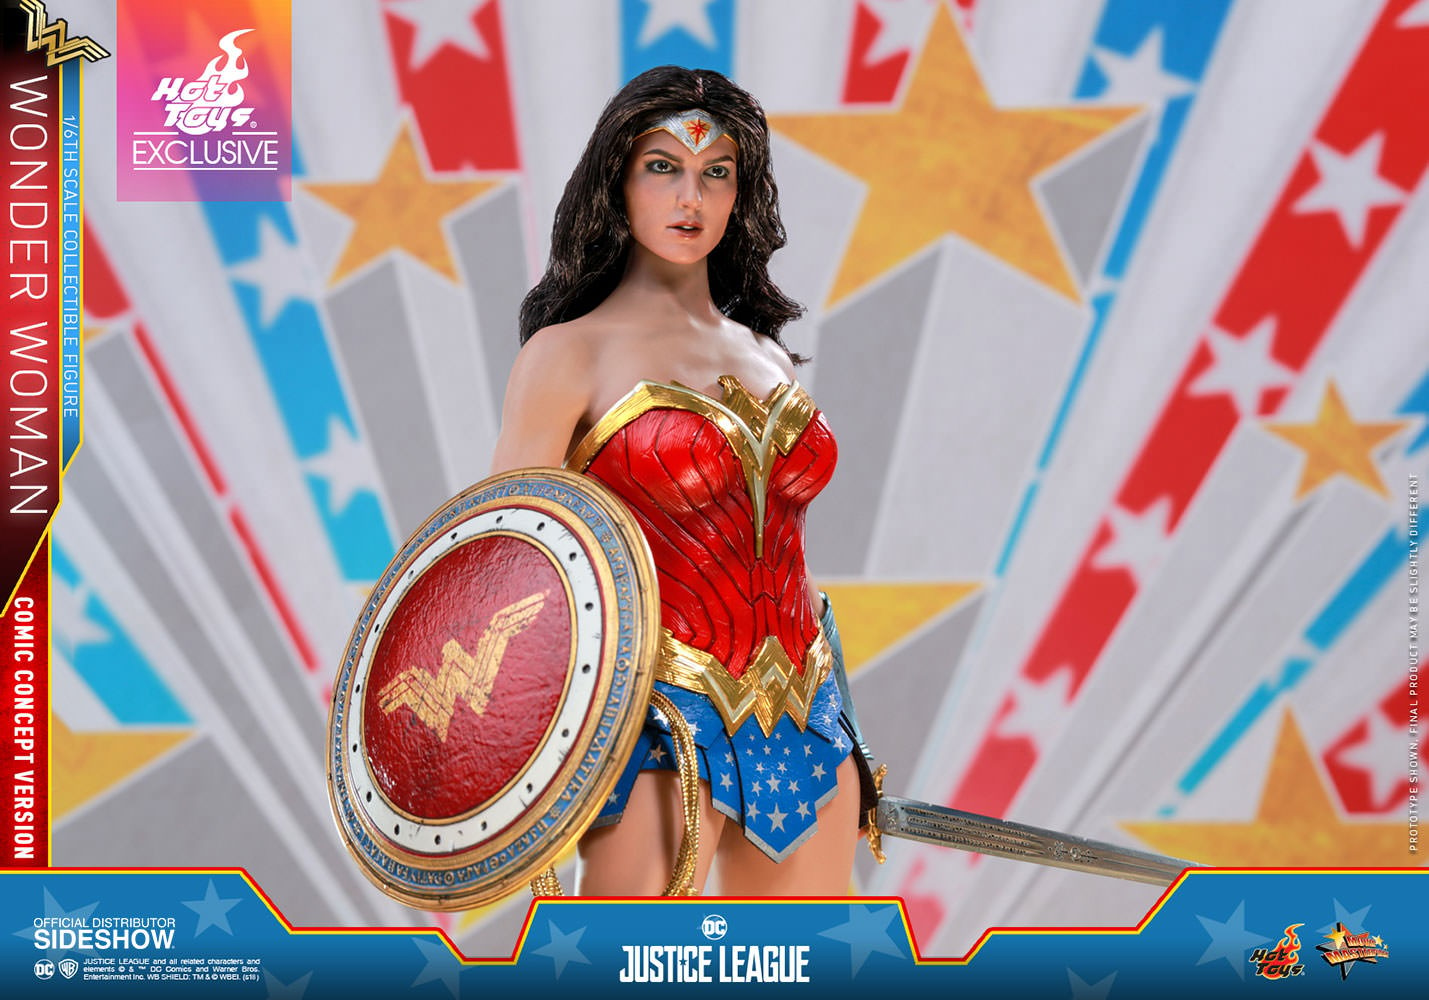 Wonder Woman Comic Concept Version Exclusive Edition (Prototype Shown) View 2